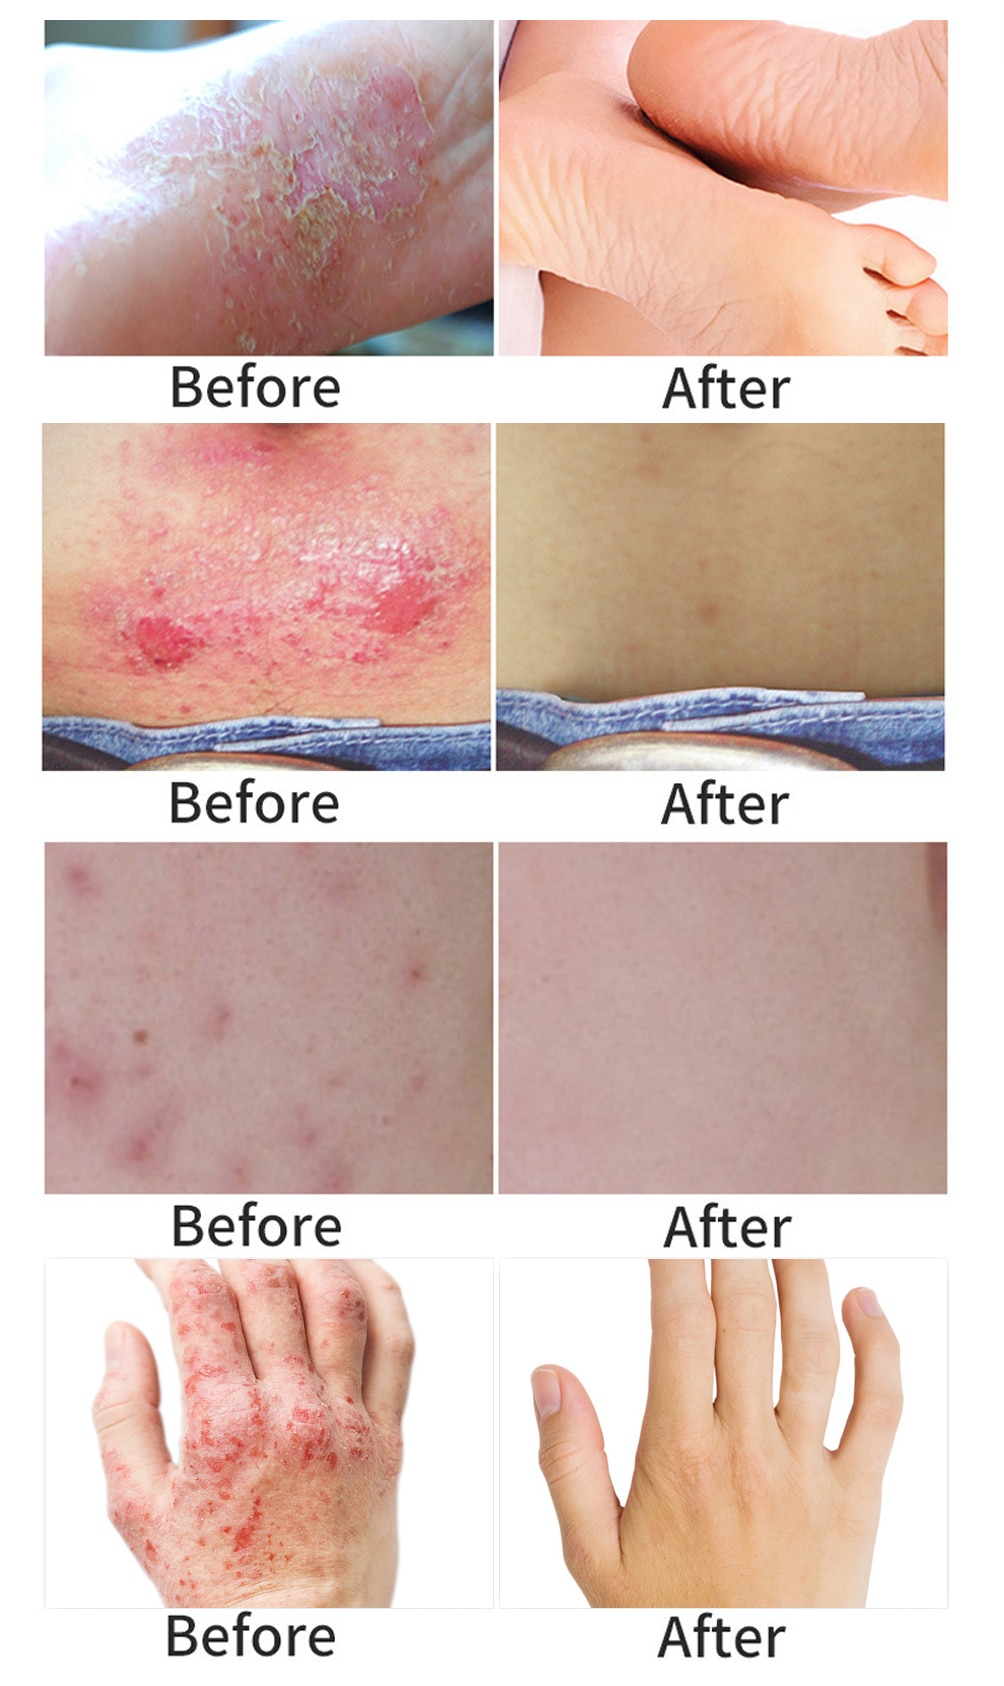 Yoxier Herbal Antibacterial Cream Psoriasis Cream Anti-itch Relief Eczema Skin Rash Urticaria Desquamation Treatment 20G